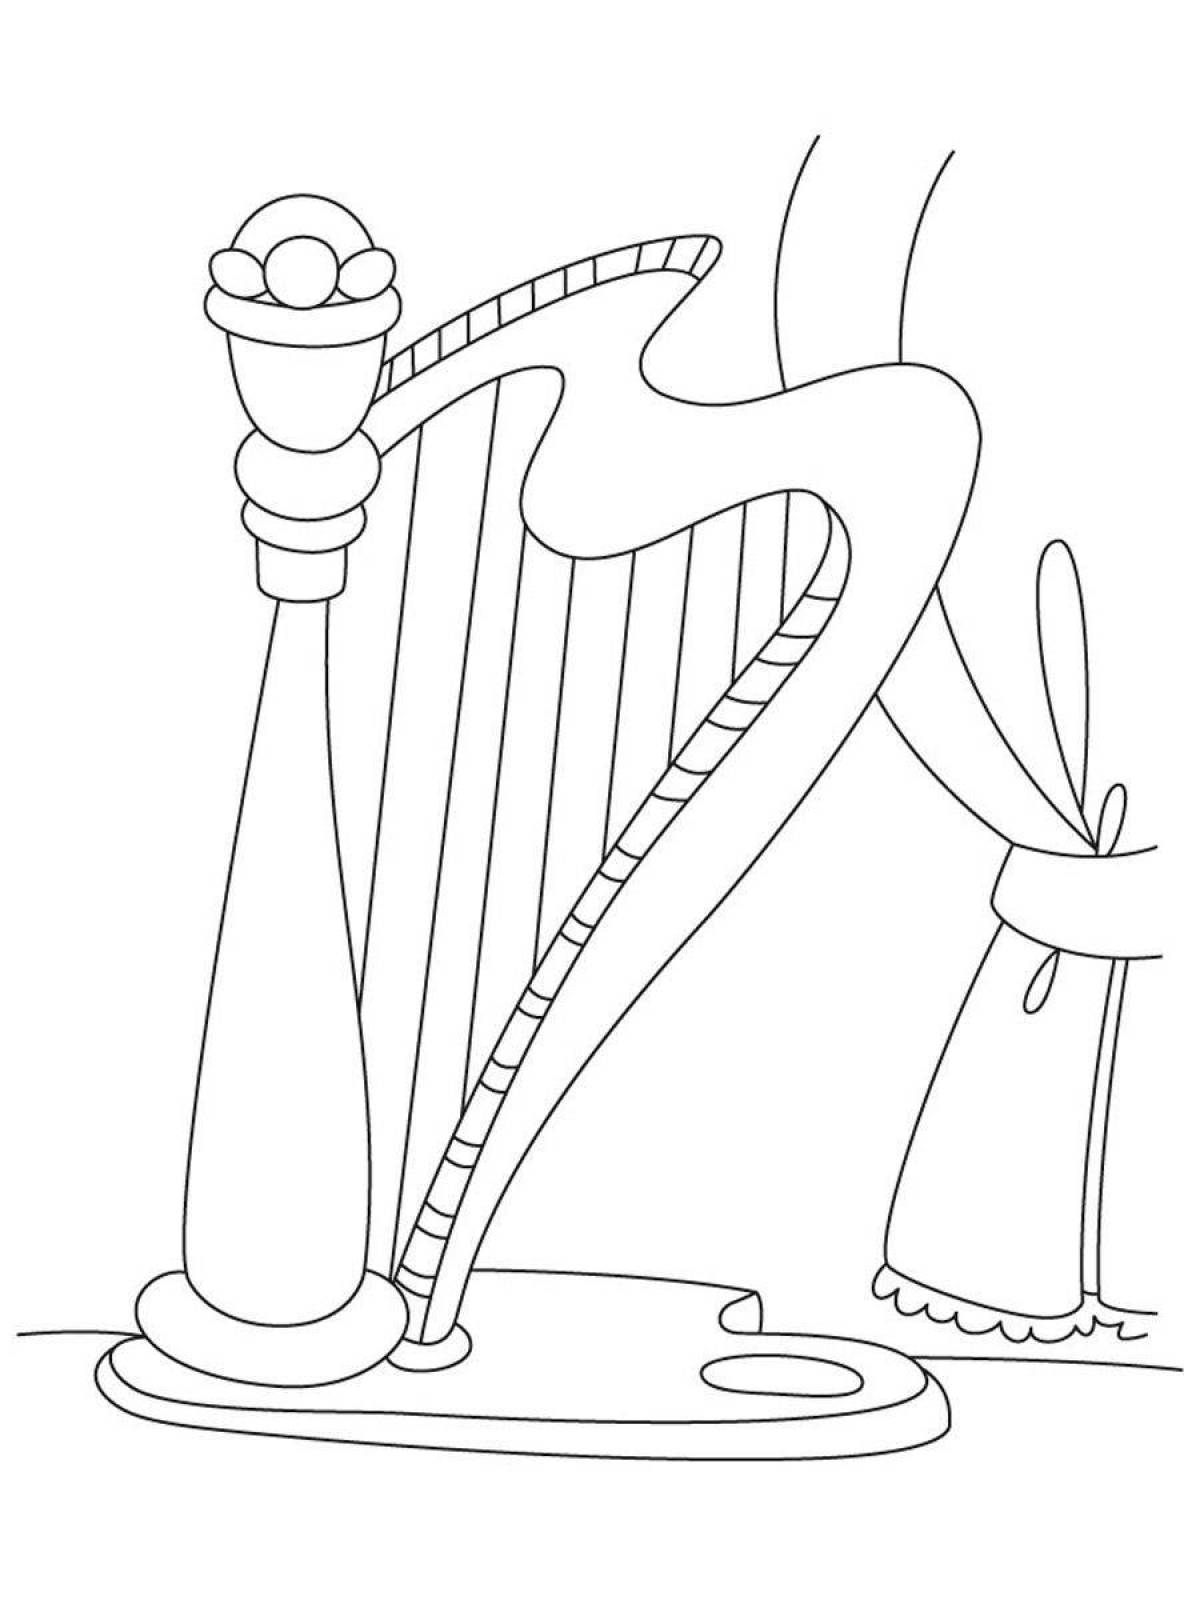 Coloring page unusual harp